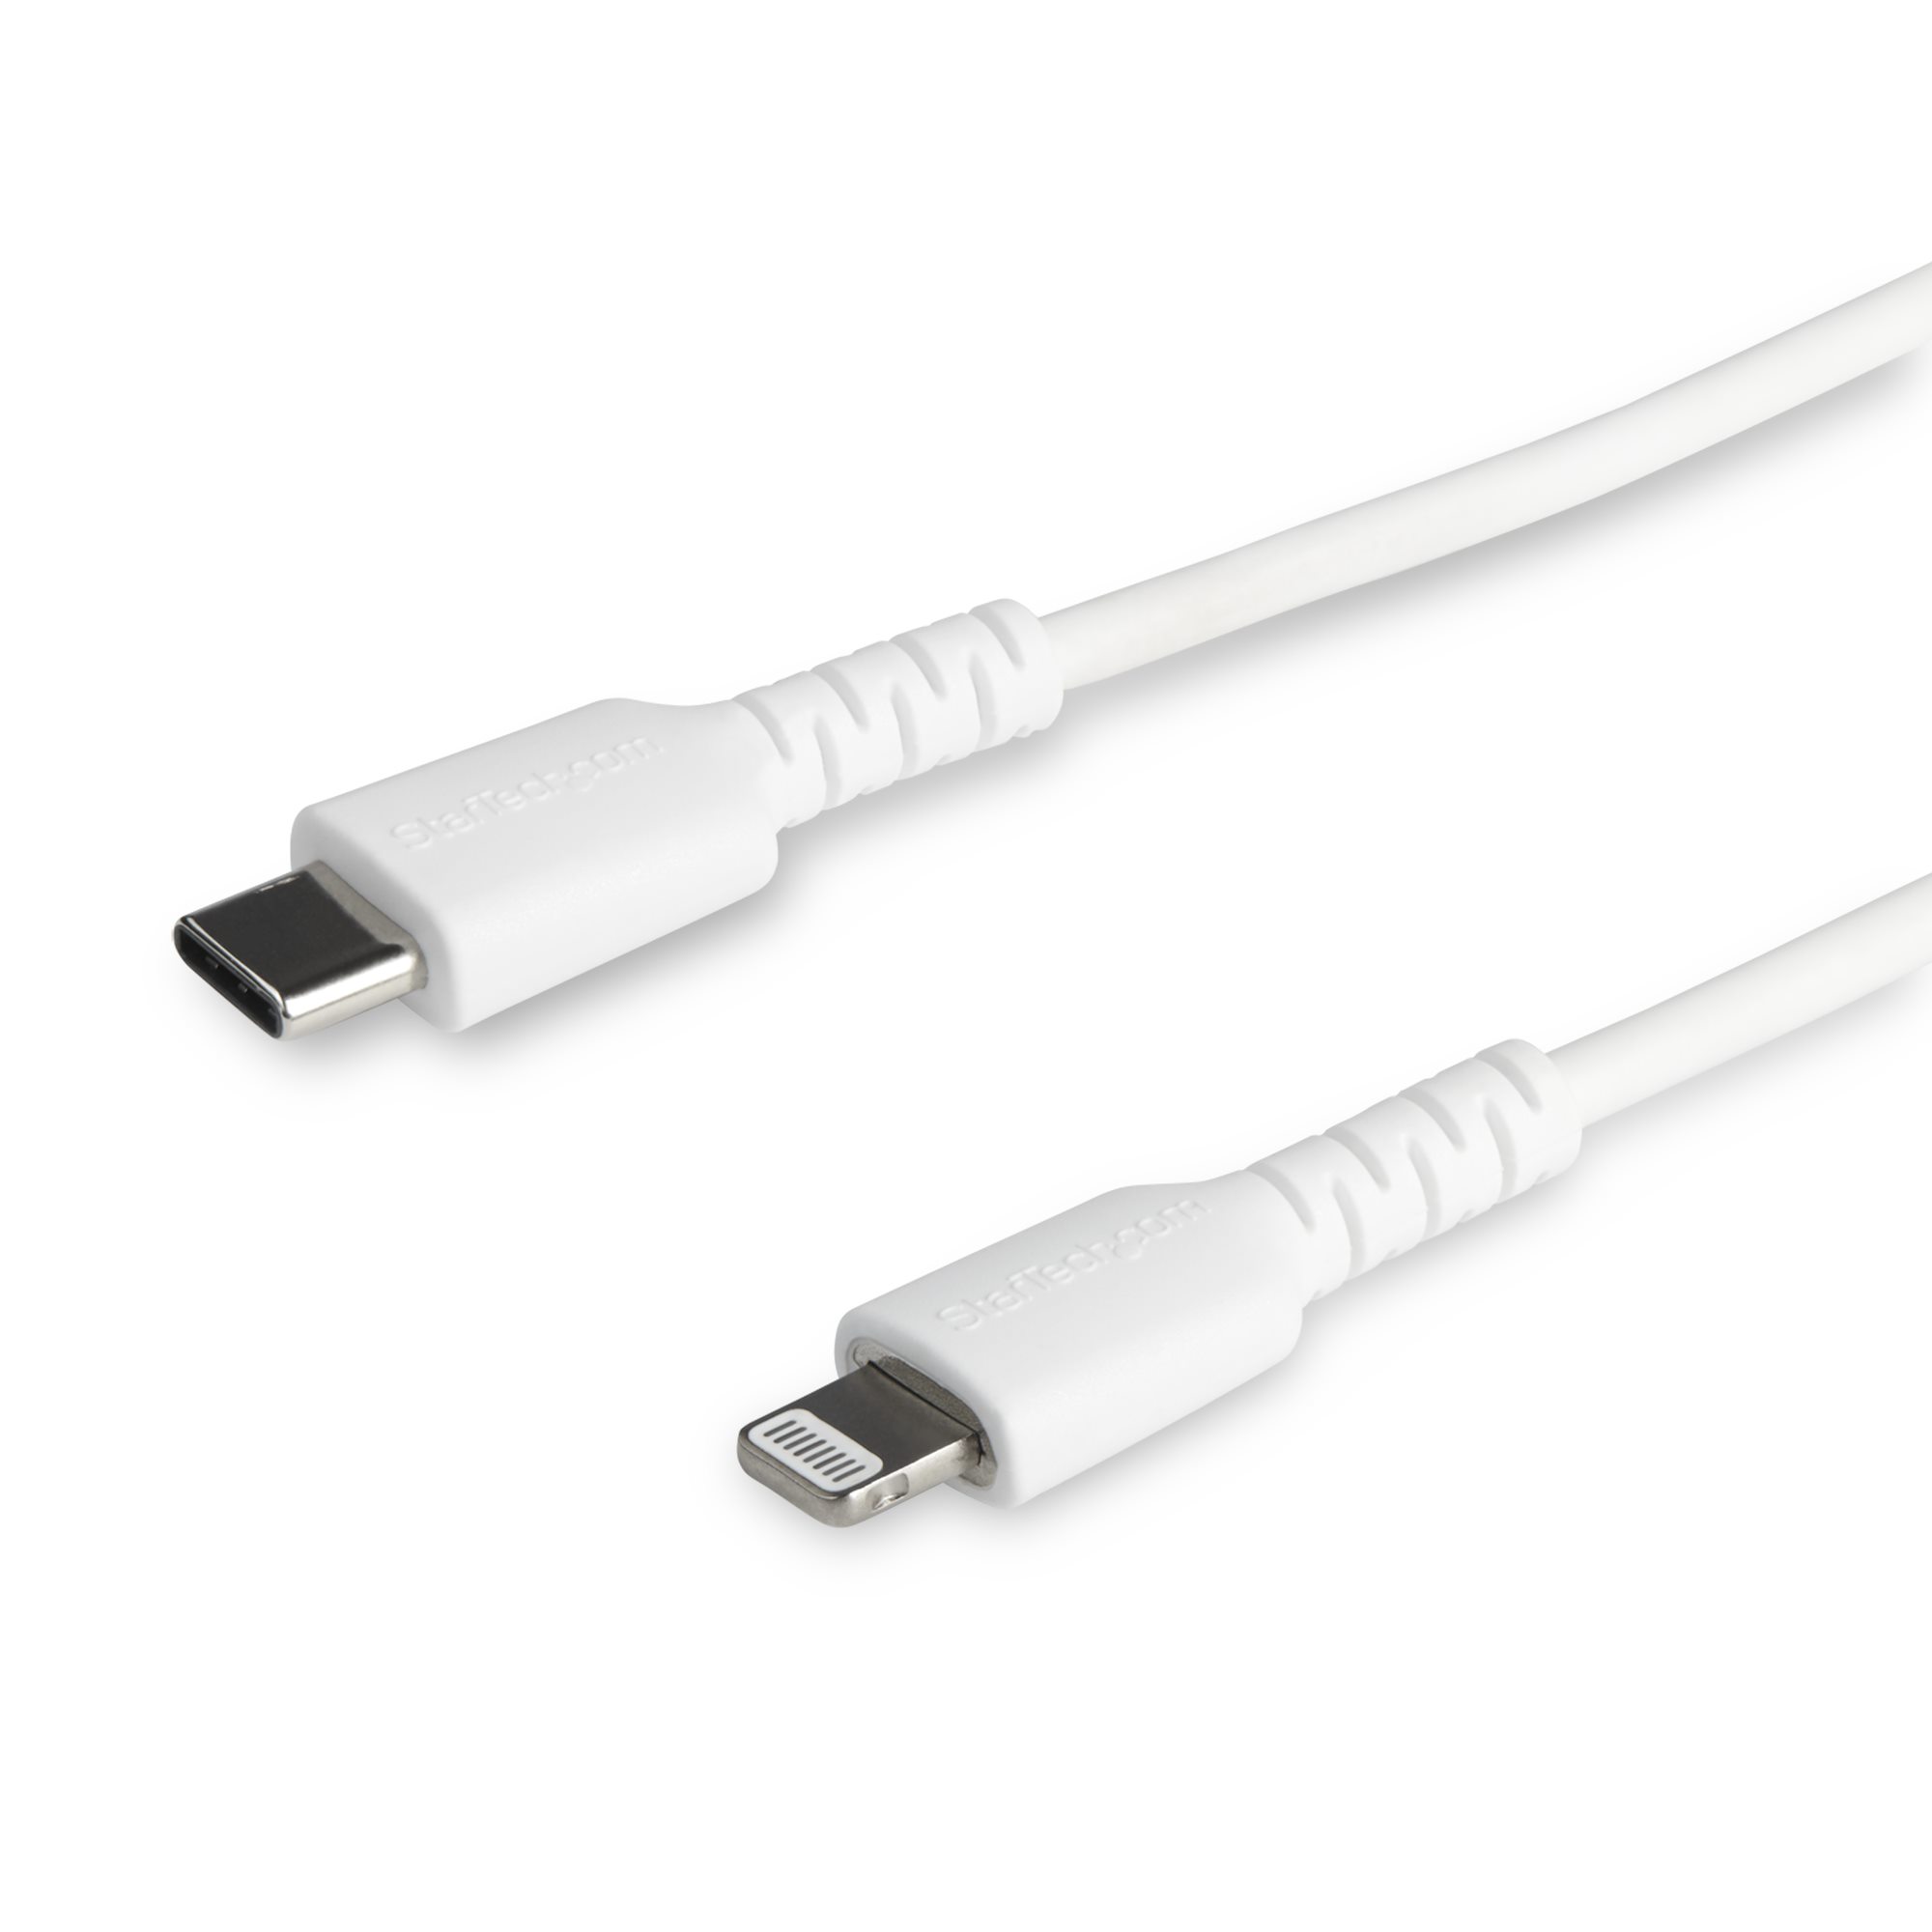 Sanctie Wedstrijd school 6ft/2m Durable USB-C to Lightning Cable - Lightning Cables | StarTech.com